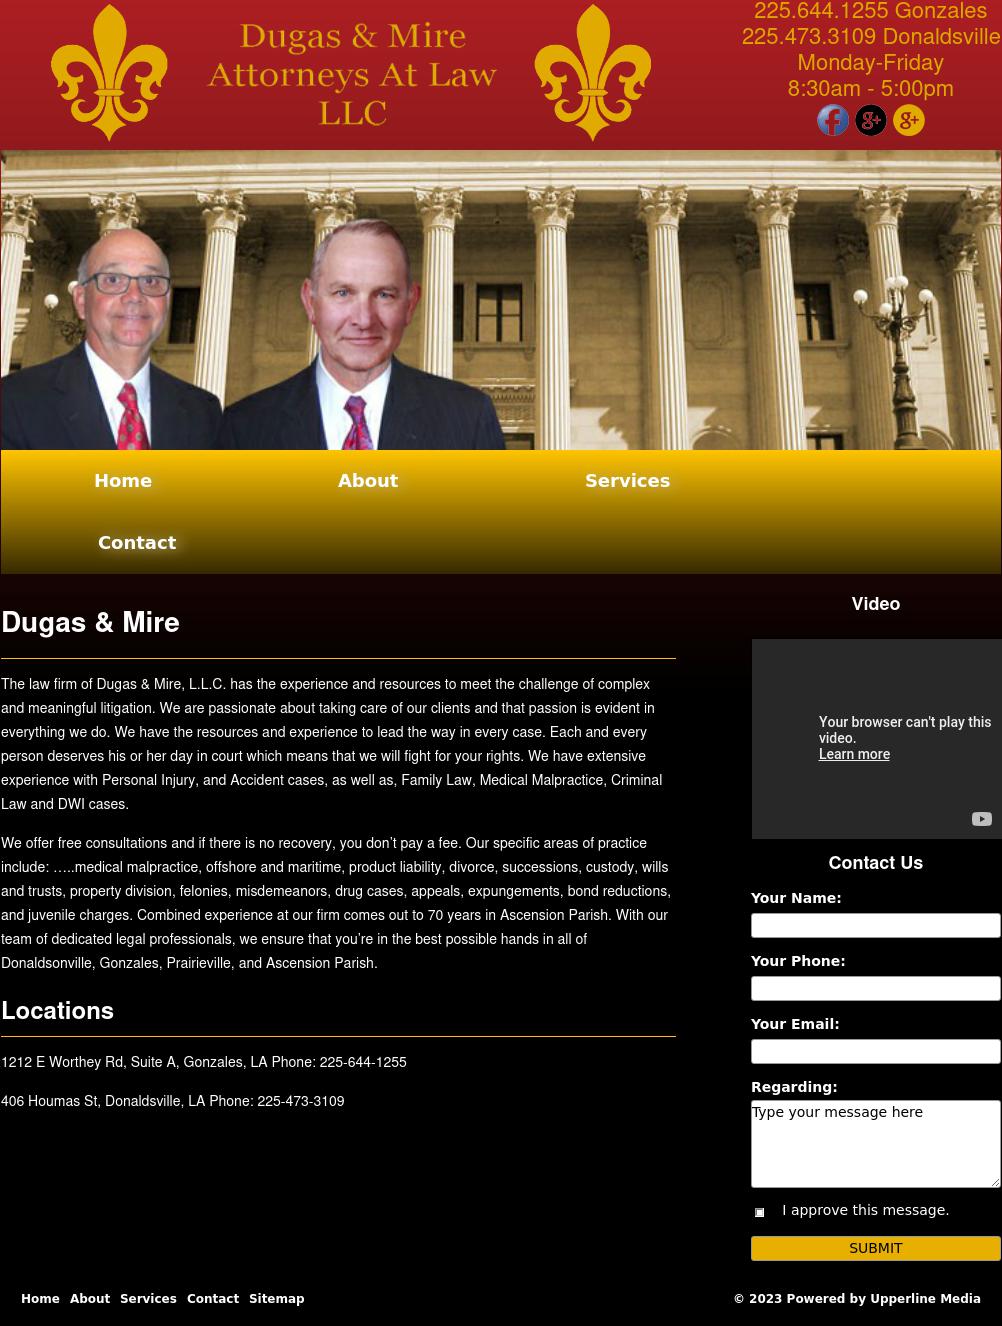 Dugas & Mire LLC - Donaldsonville LA Lawyers